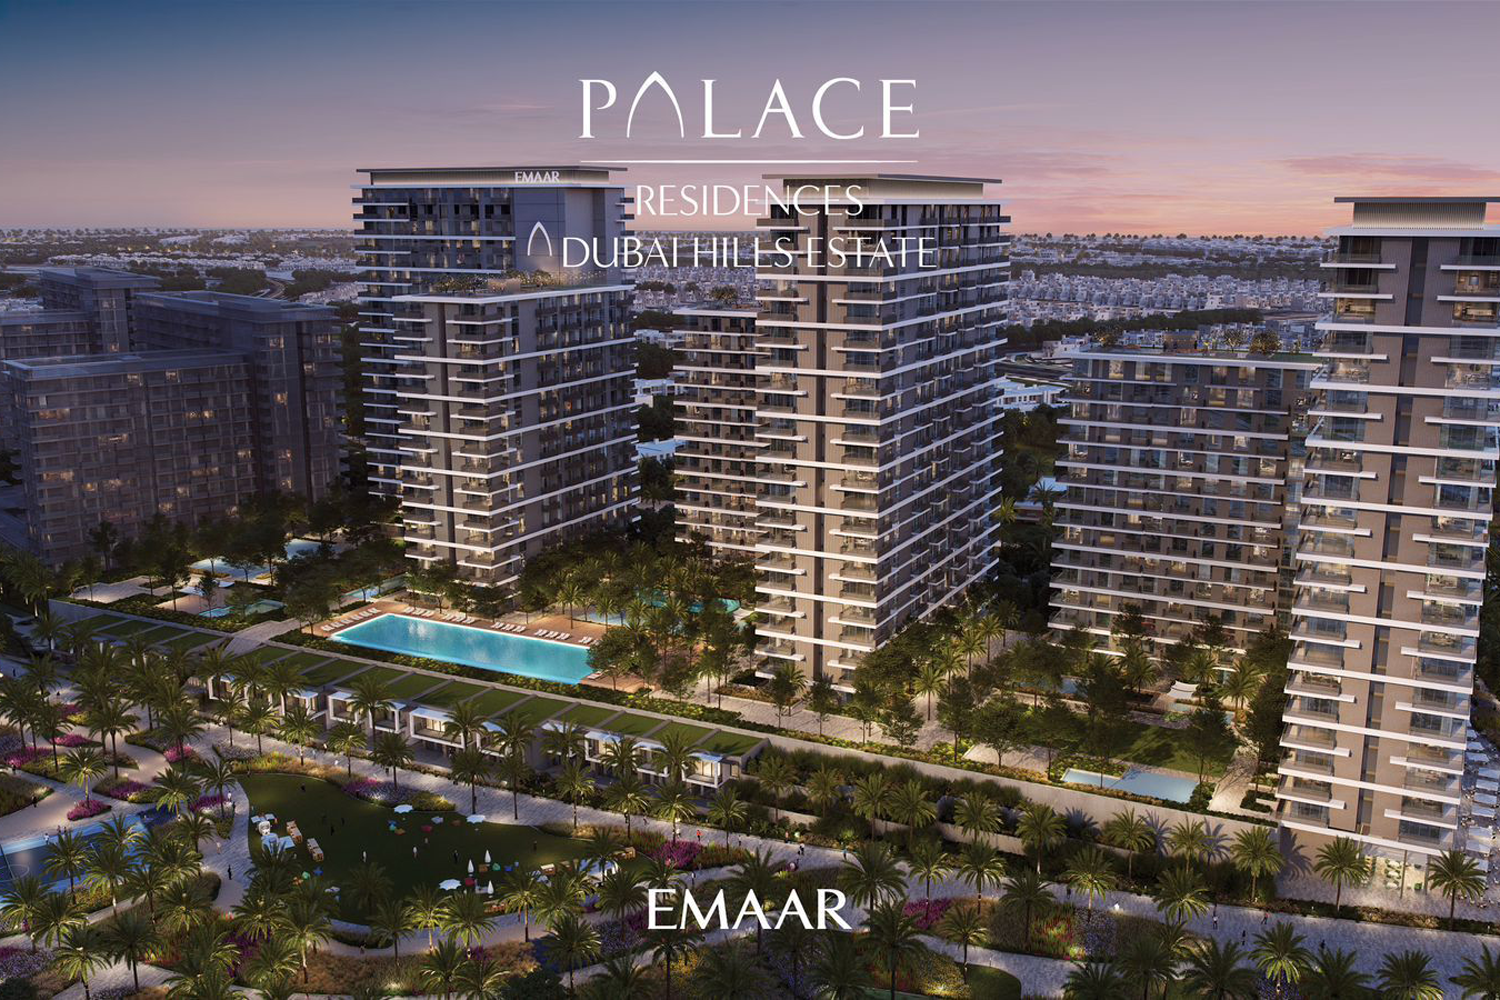 latest-project-in-dubai-palace-residences-for-sale-in-dubai-hills-estate